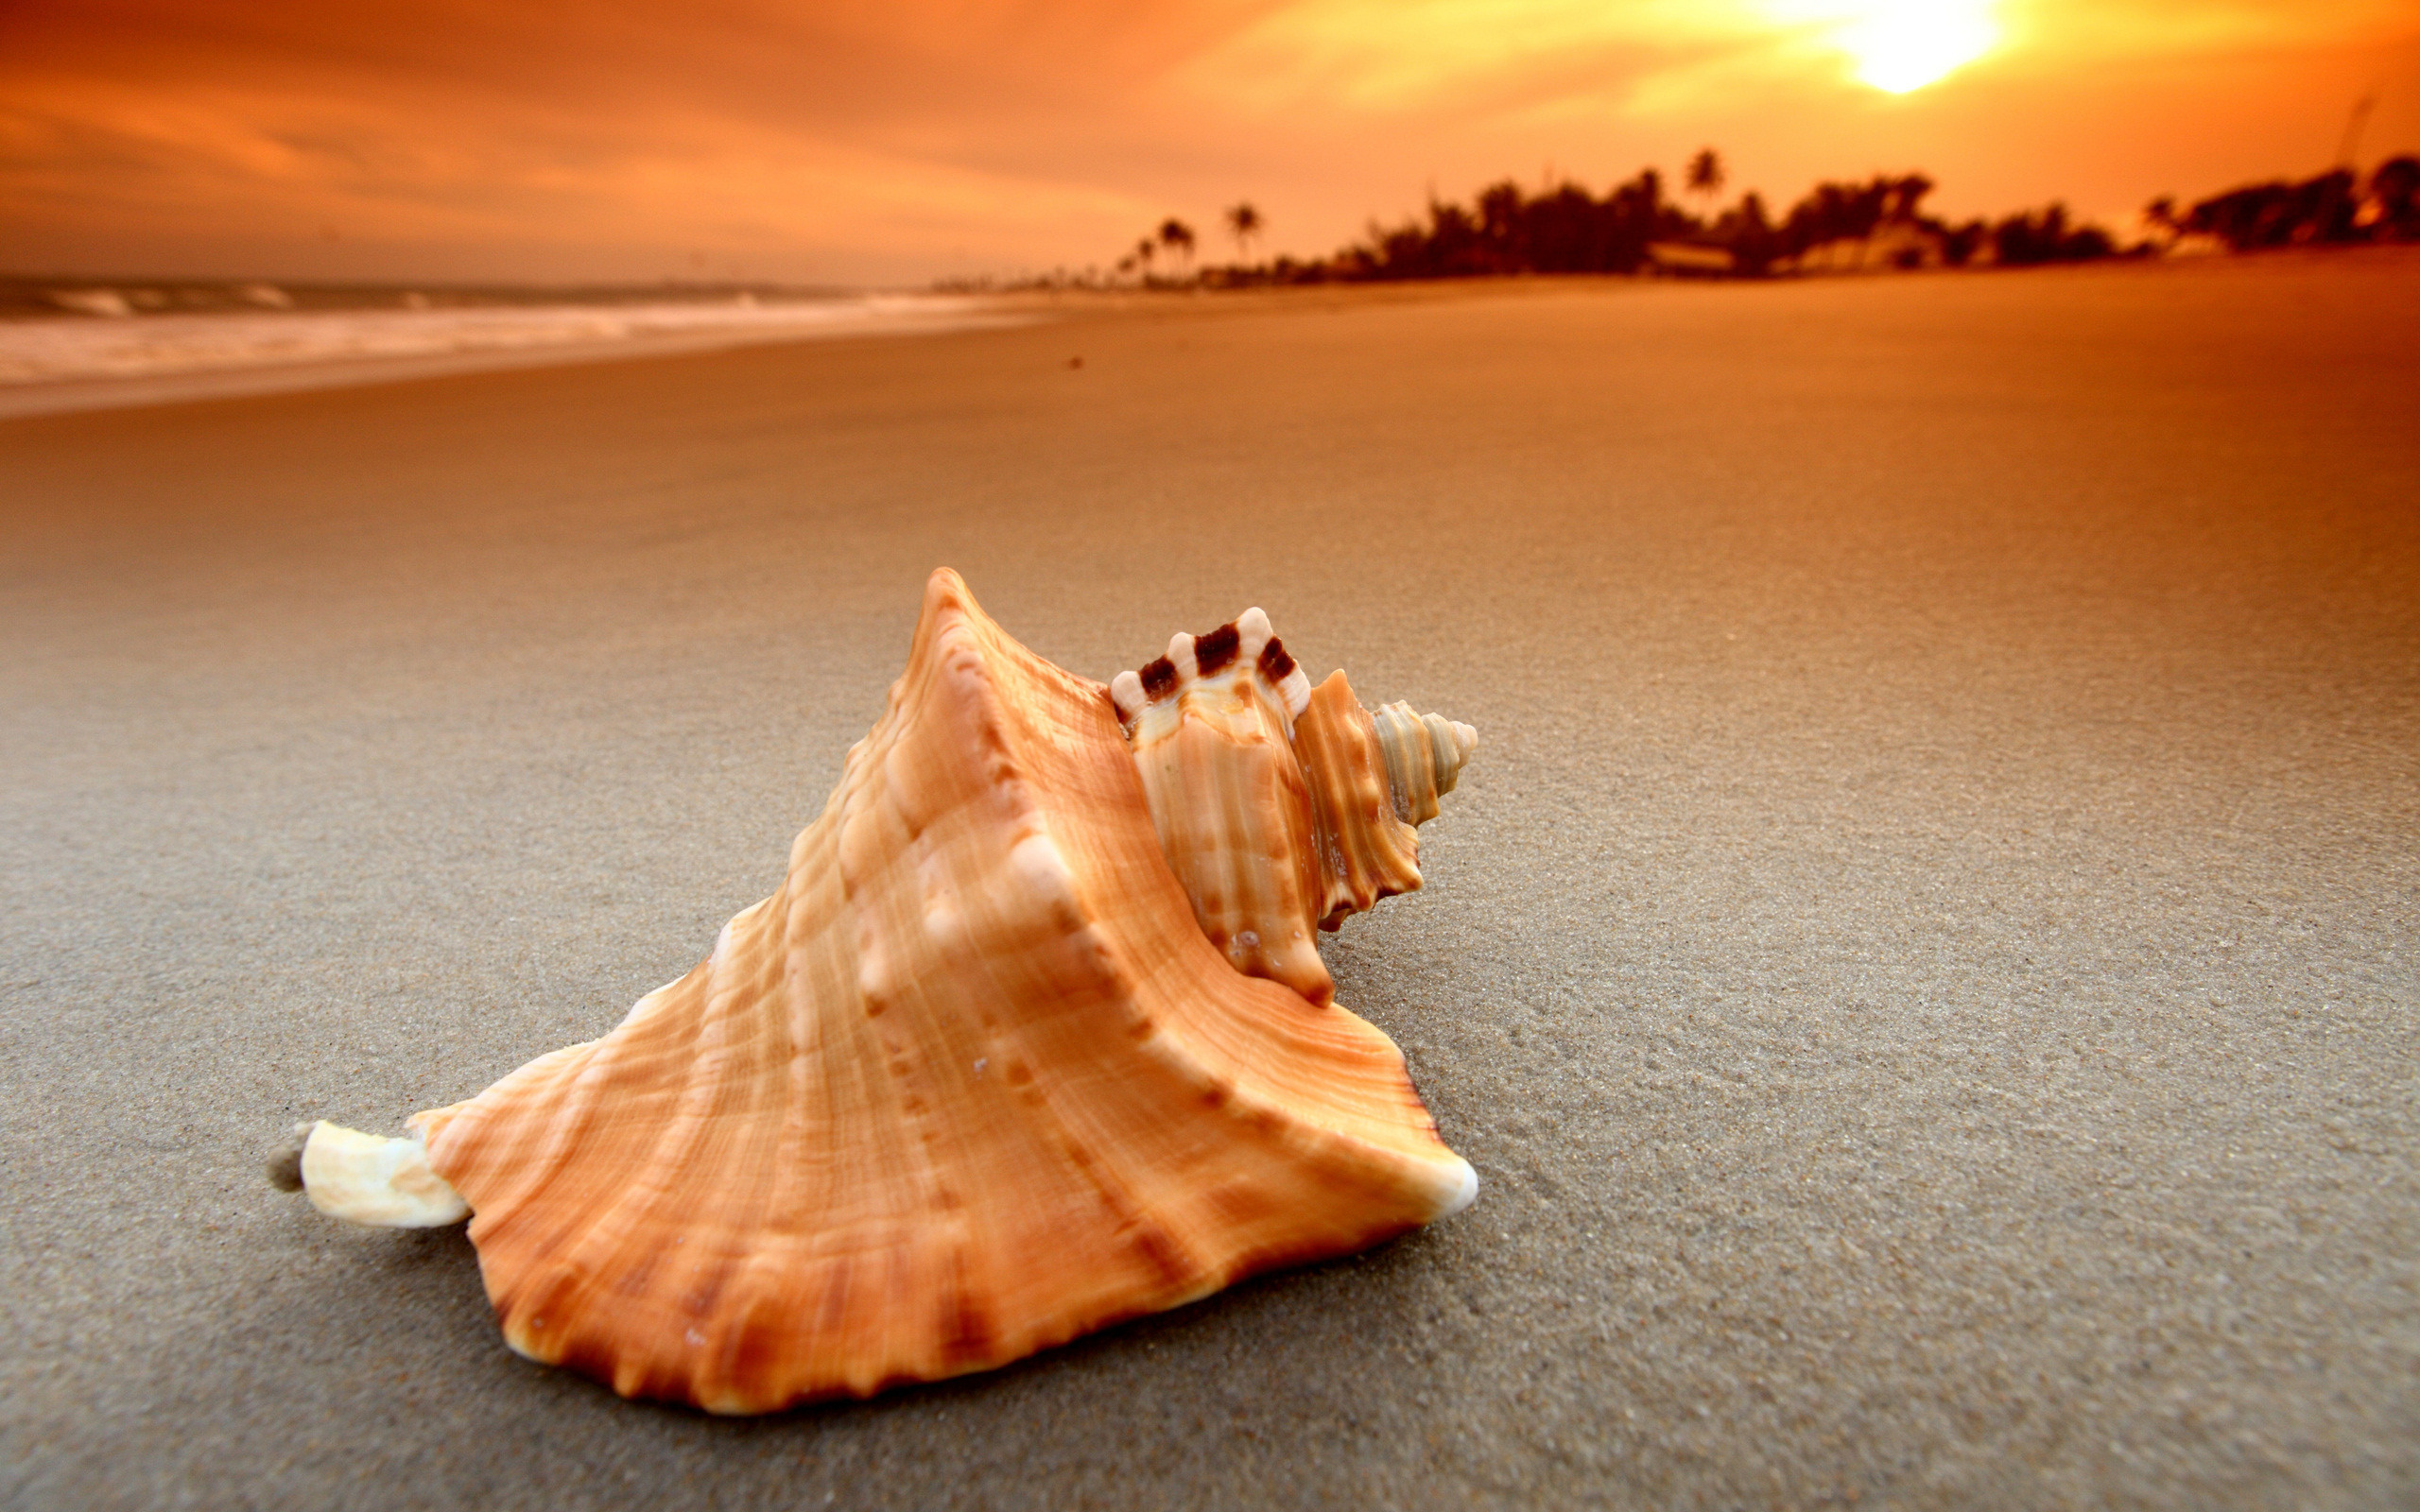 макро, ракушка на песке, закат, берег, красивые обои, मैक्रो, रेत में सूरज, सूर्यास्त, किनारे, सुंदर वॉलपेपर, macro, shell in the sand, sunset, shore, beautiful wallpaper